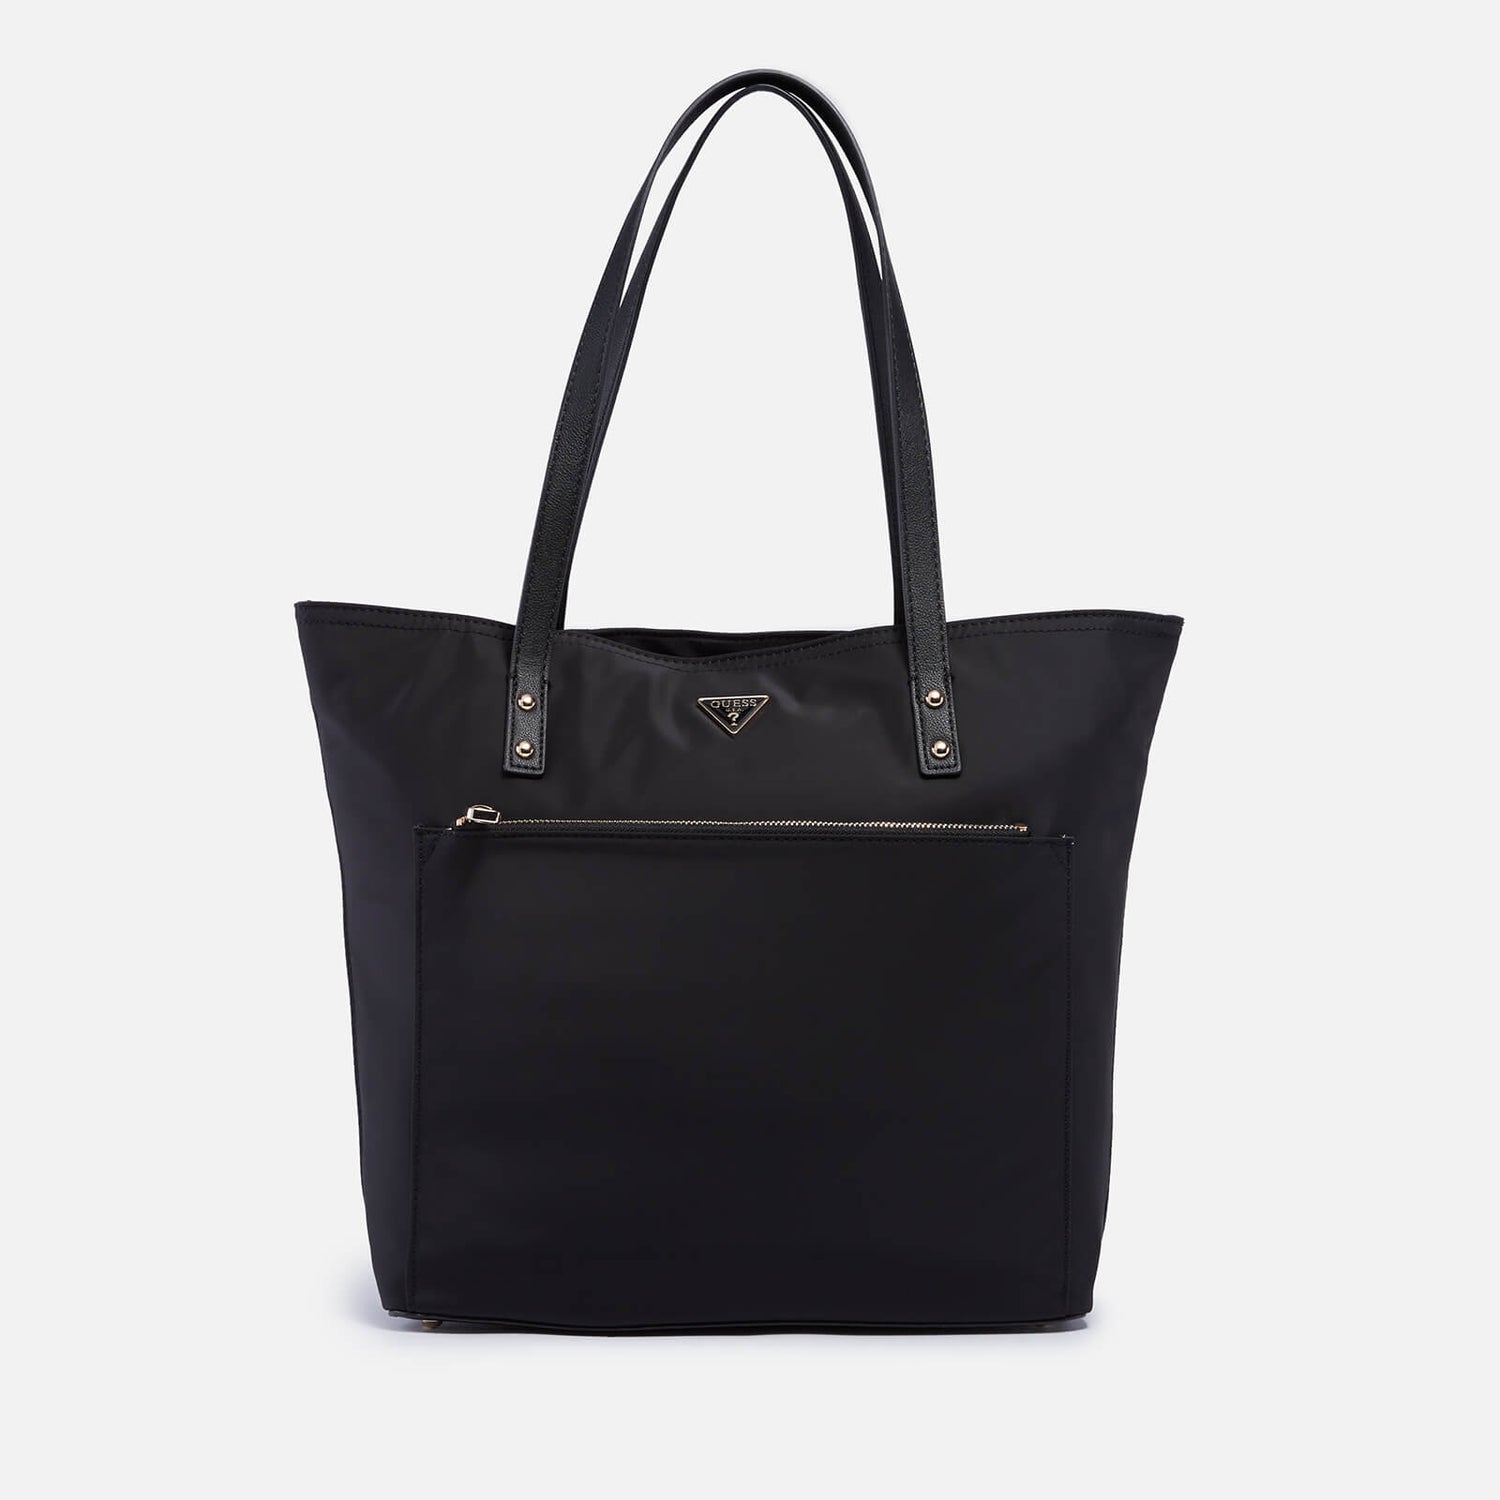 Guess Women's Eco Gemma Tote Bag - Black